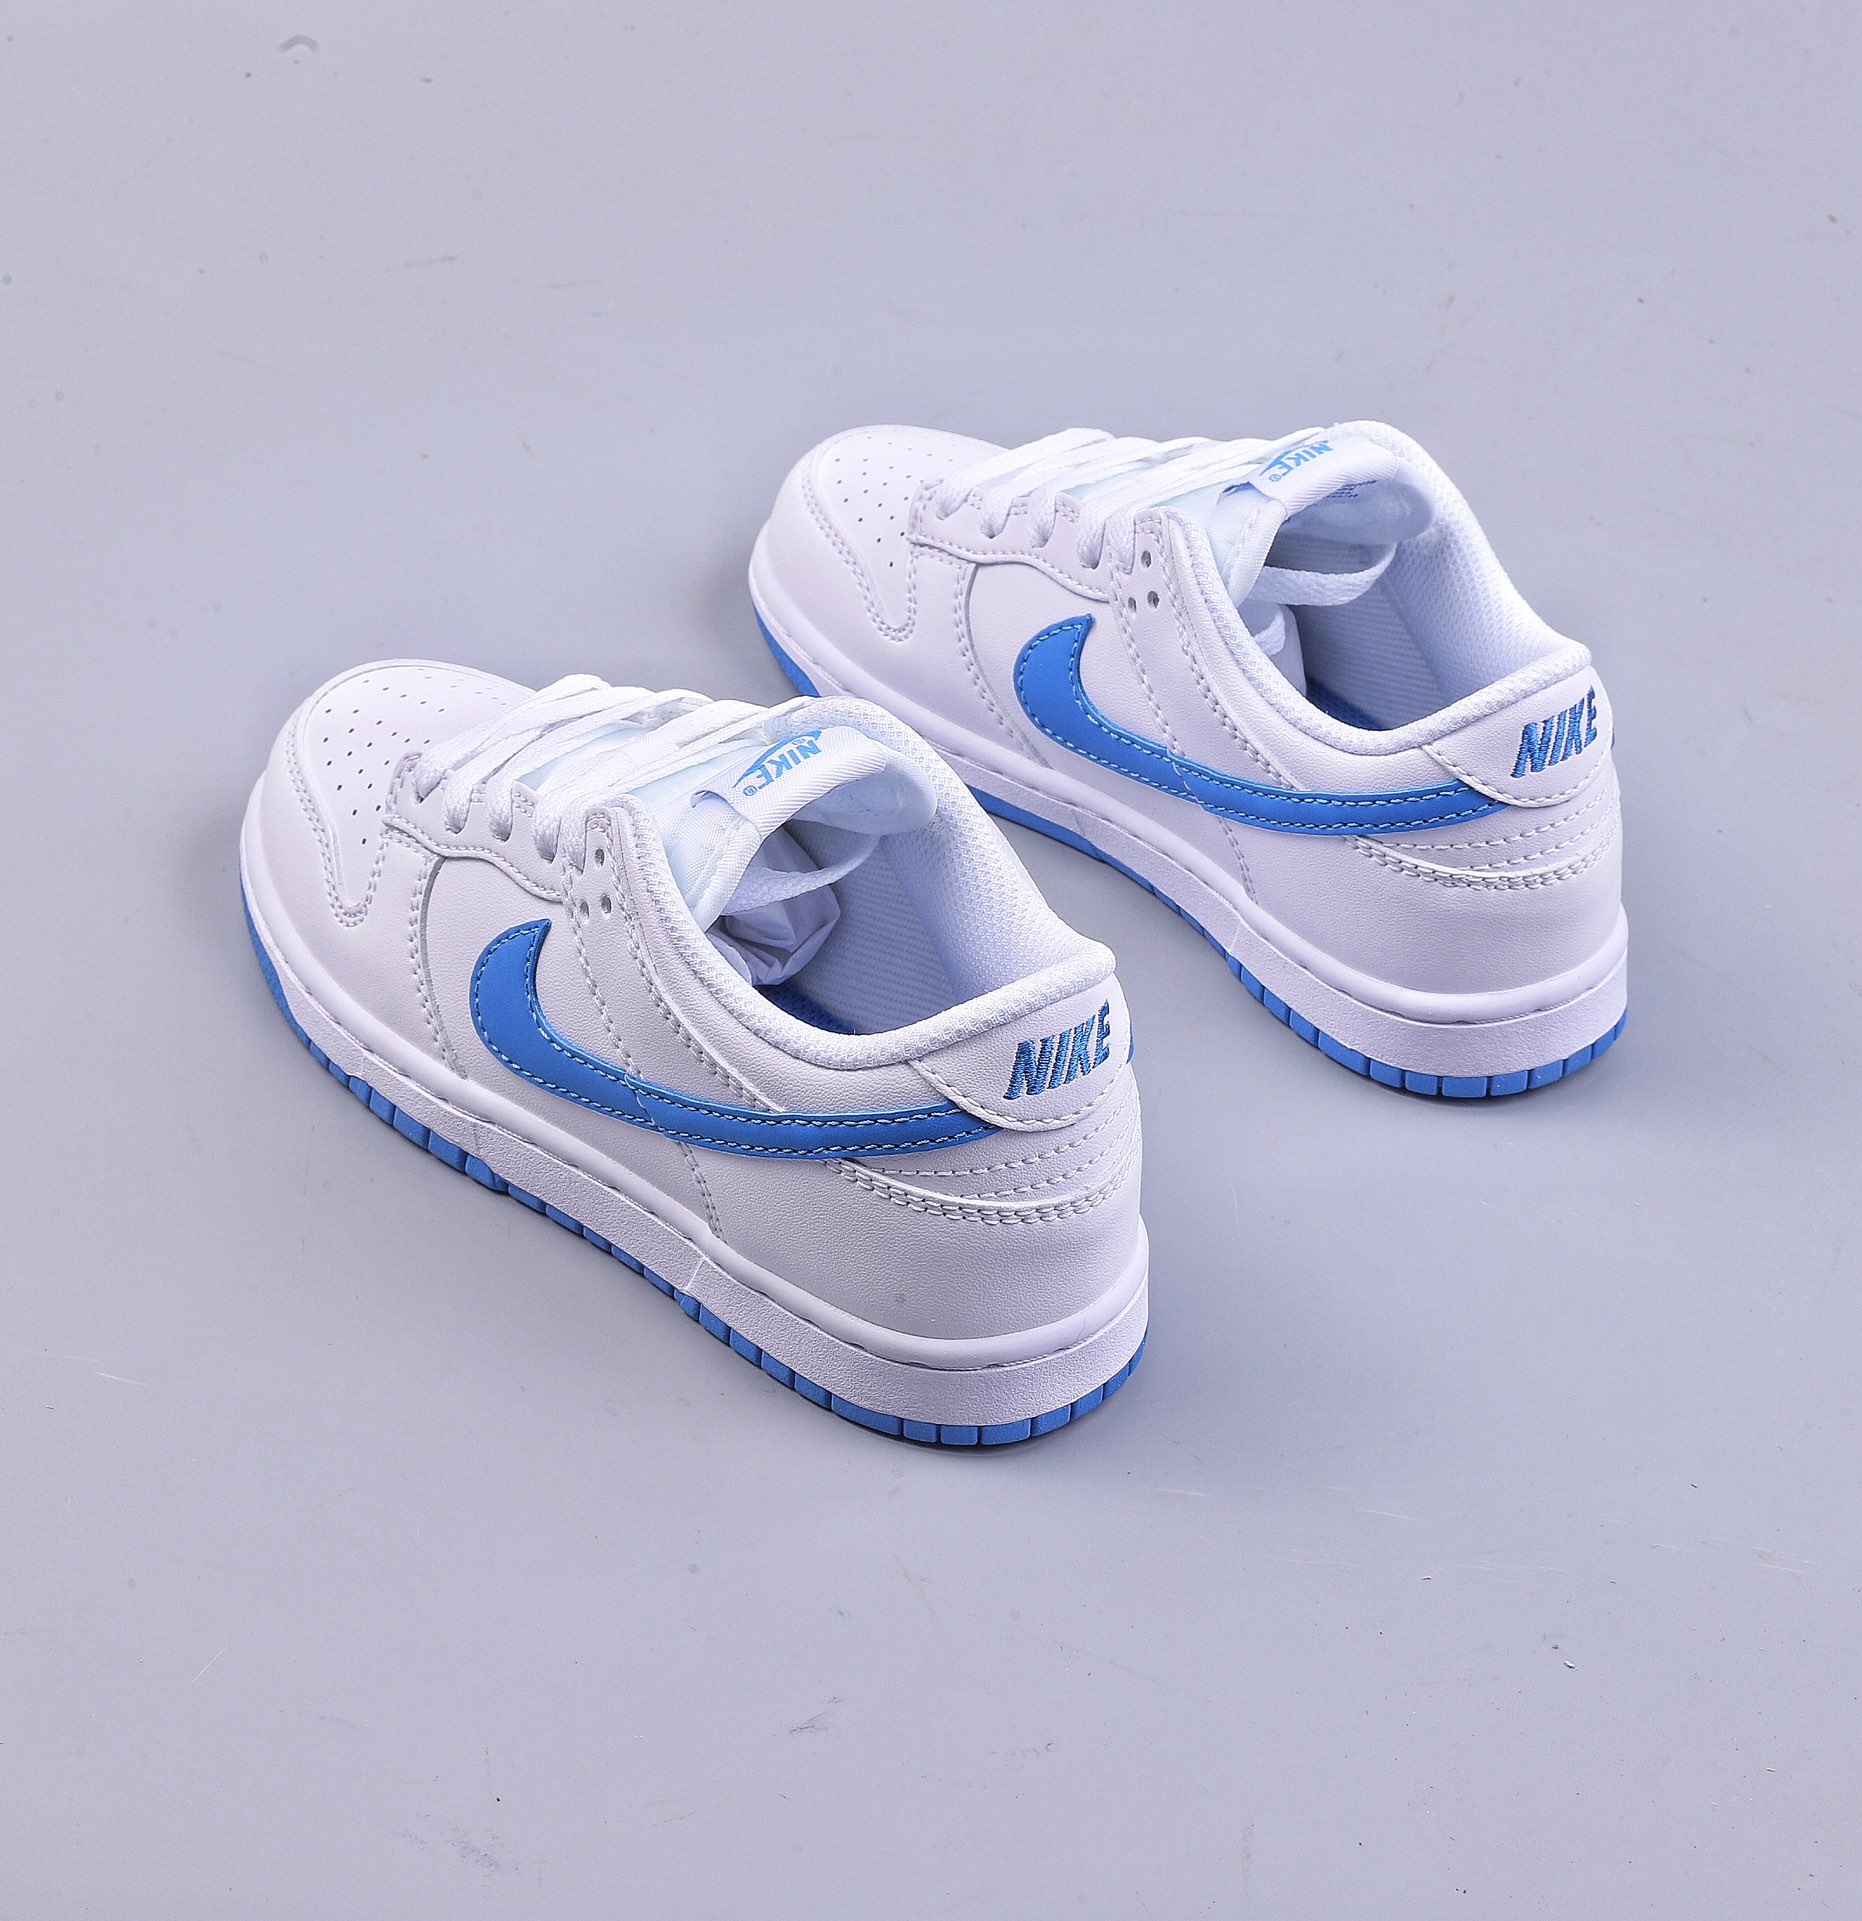 C children's shoes Nk Dunk Low white blue SB low-top sports casual children's shoes DH9756-105